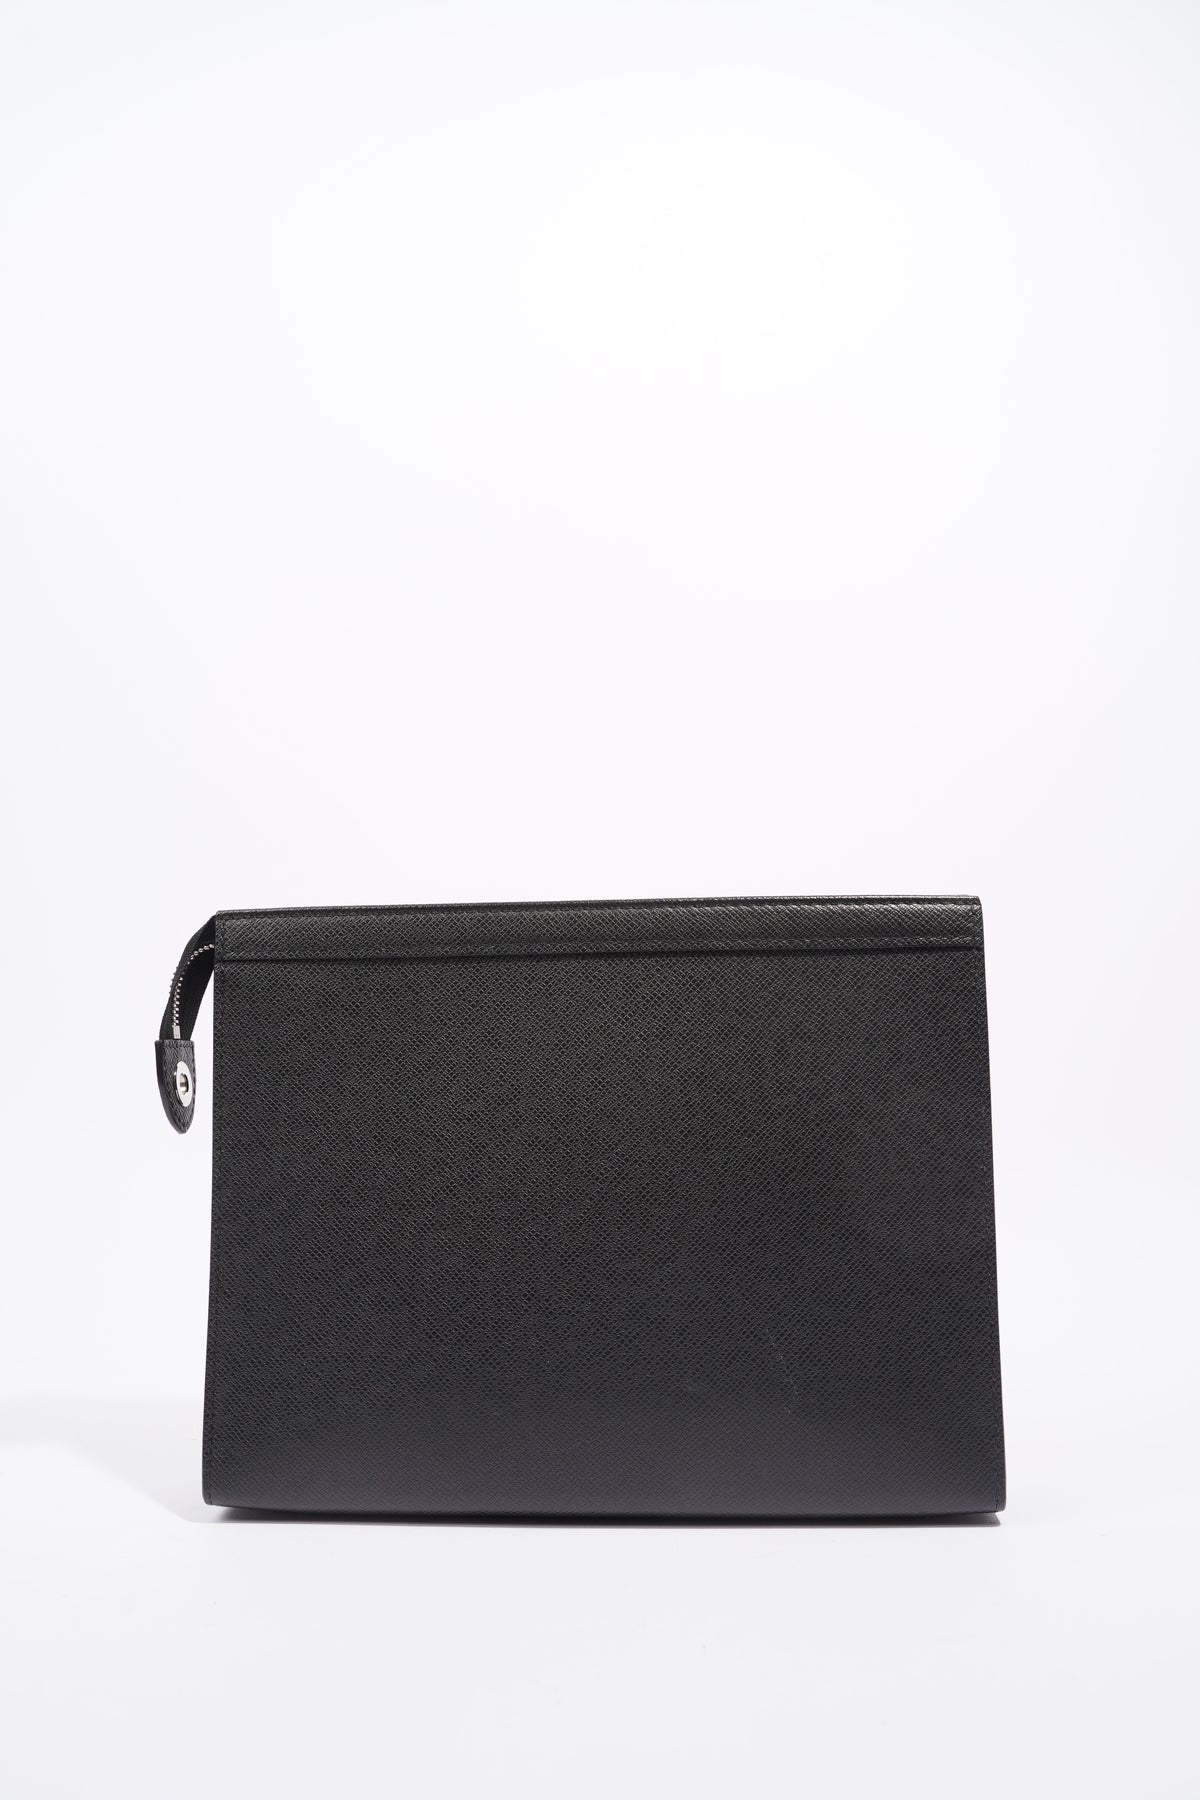 Louis Vuitton - Authenticated Pochette Voyage Small Bag - Leather Black Plain for Men, Very Good Condition